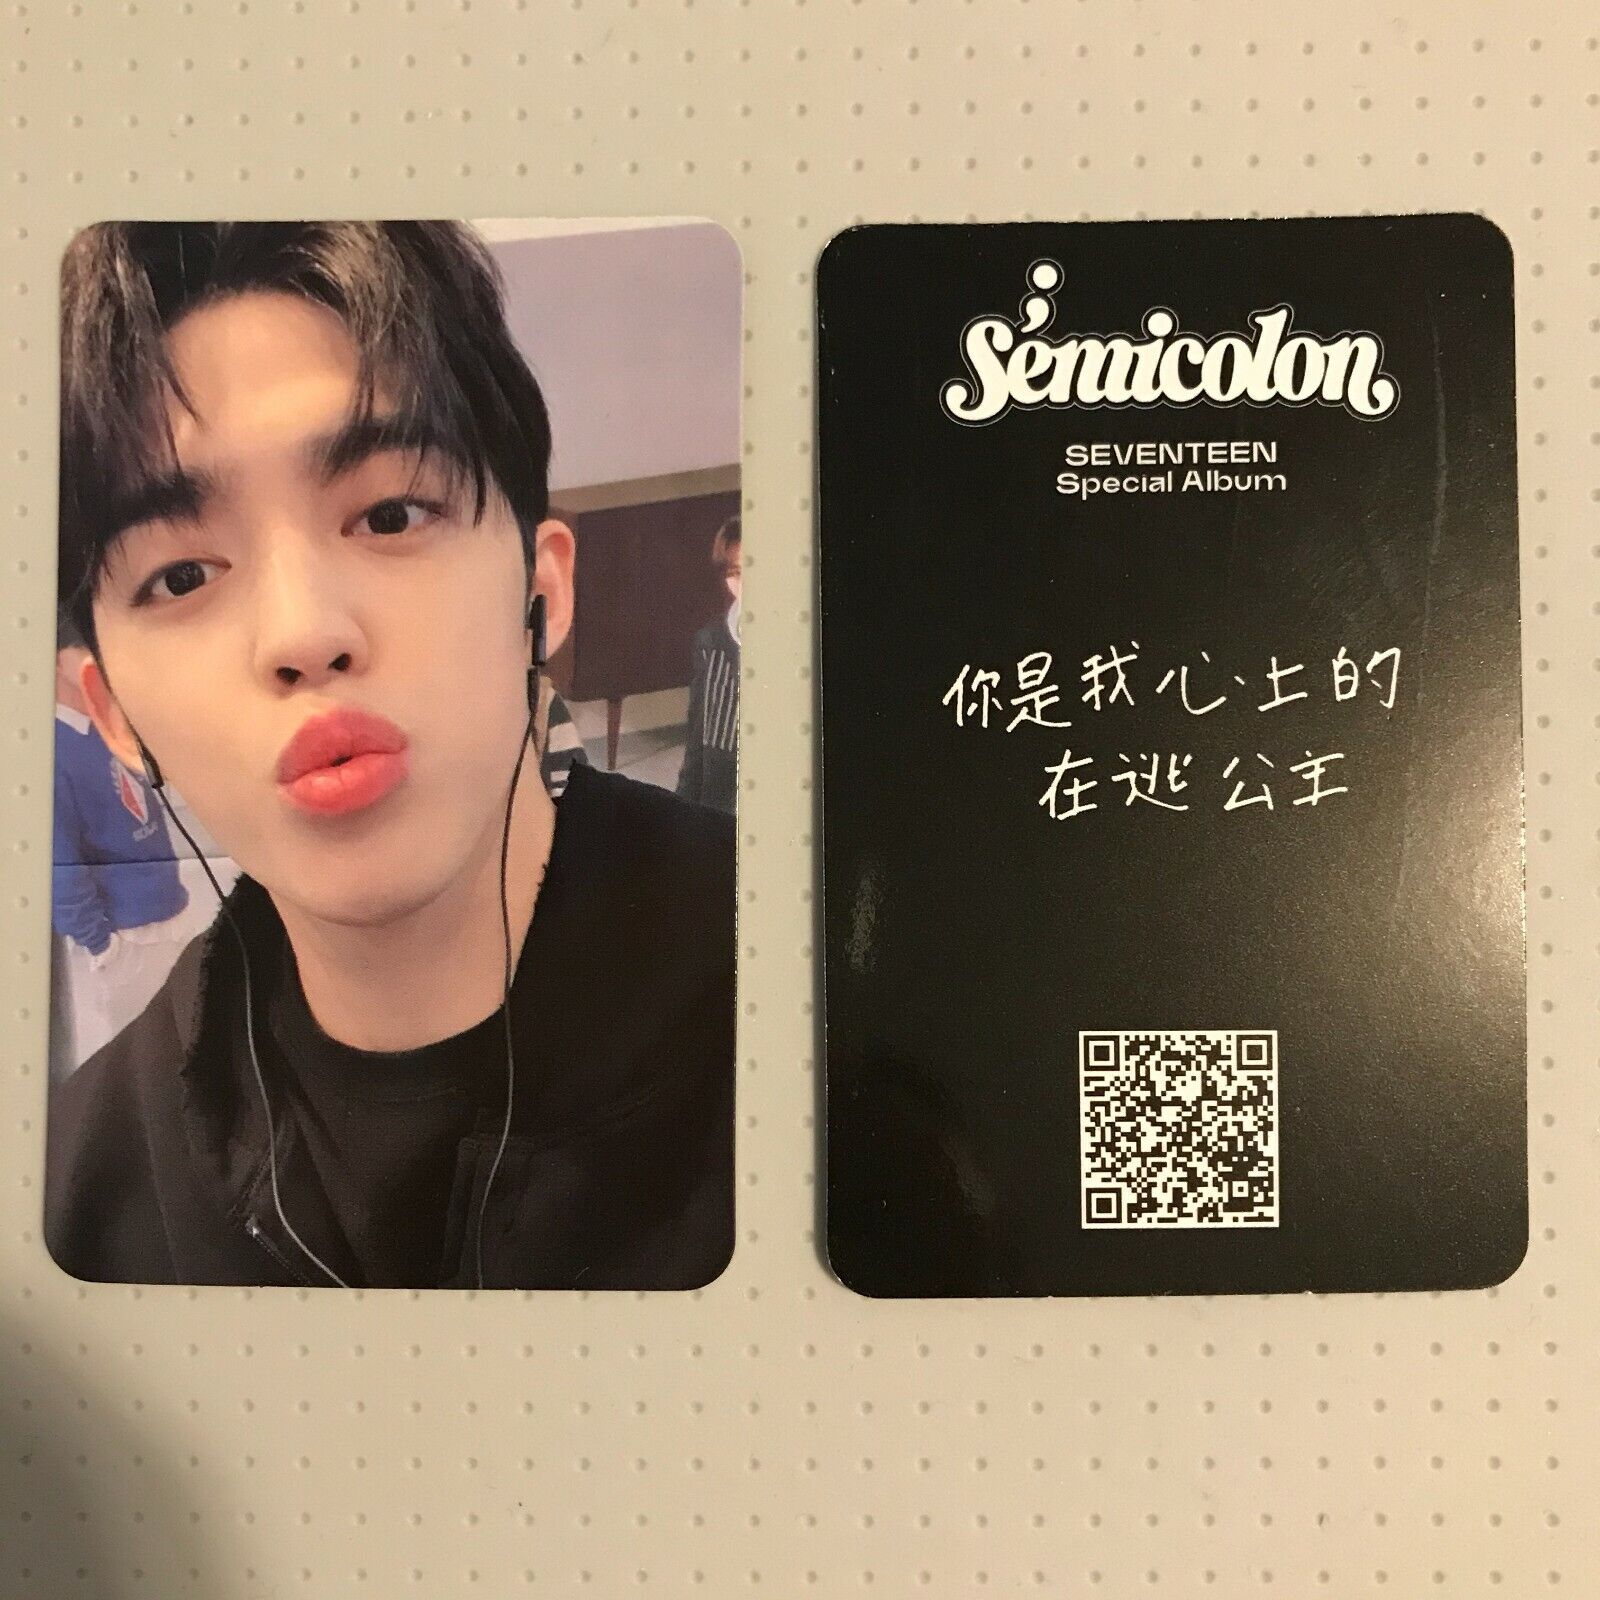 Seventeen Semicolon Yizhiyu Fansign Photocards 